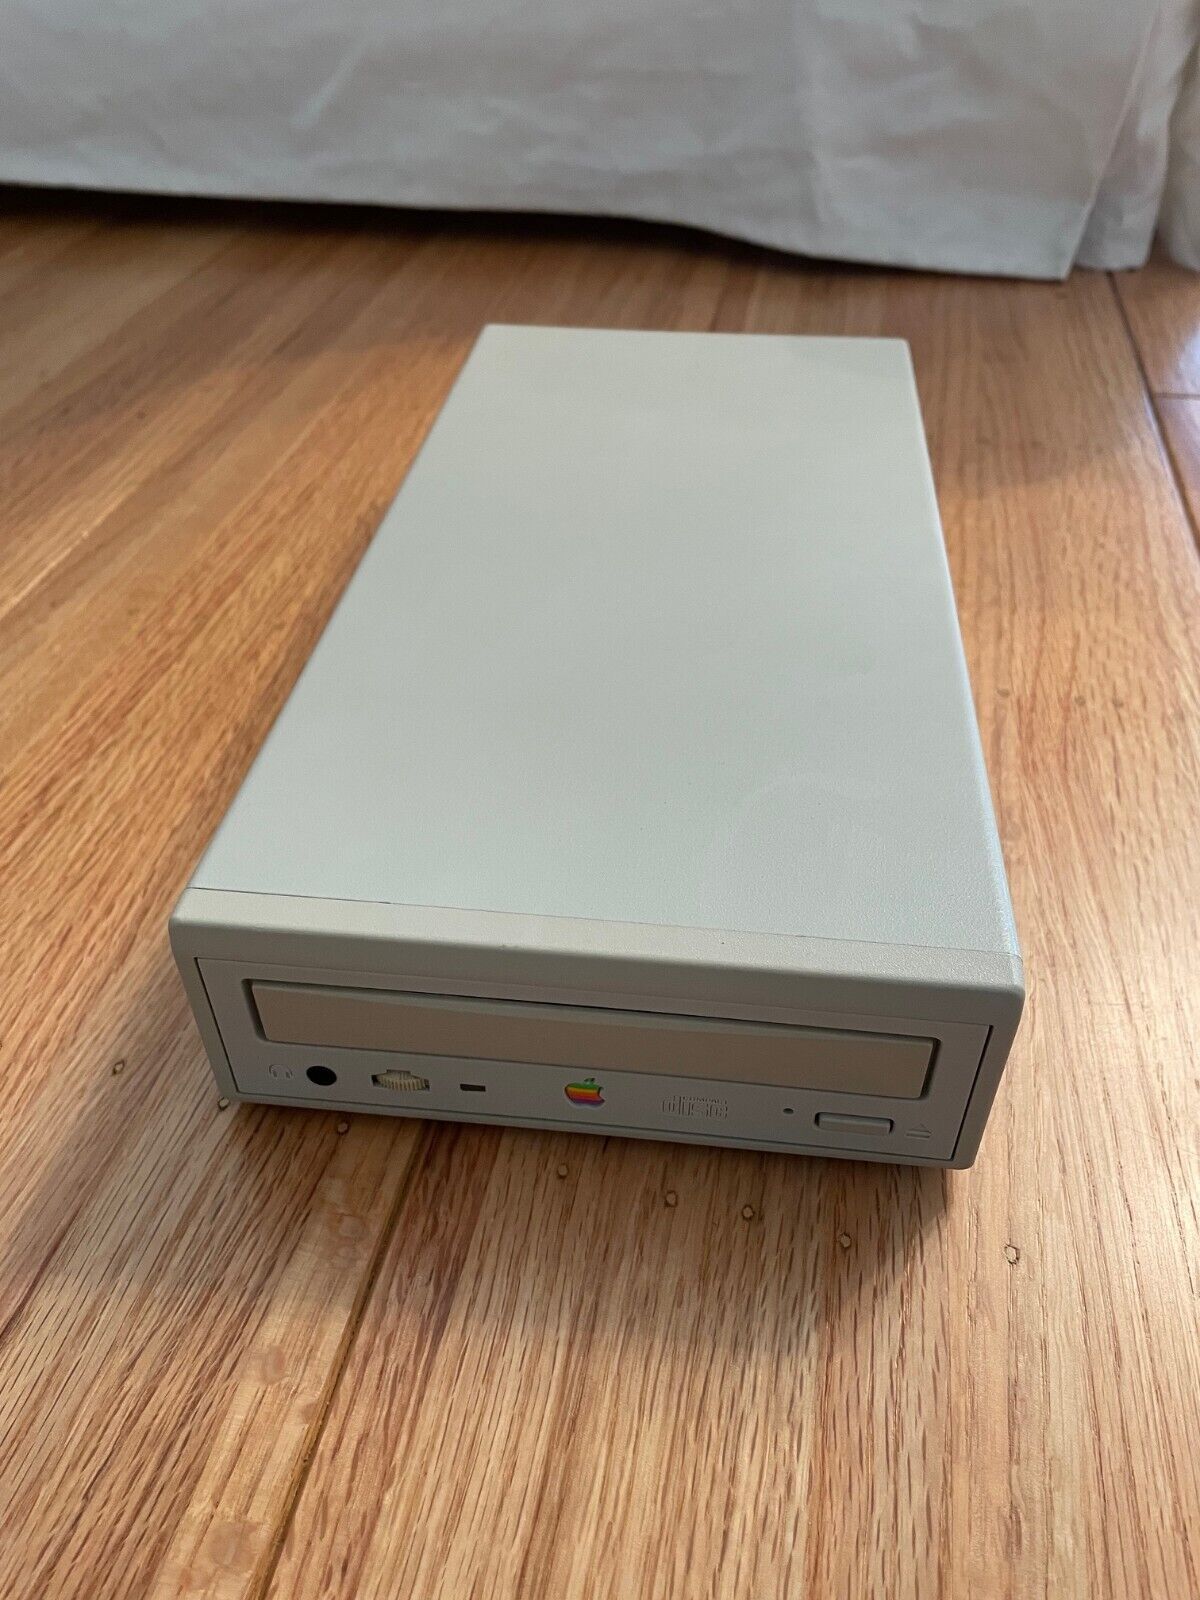 Apple External SCSI CD-ROM Disk Drive AppleCD 600e Tested-Works